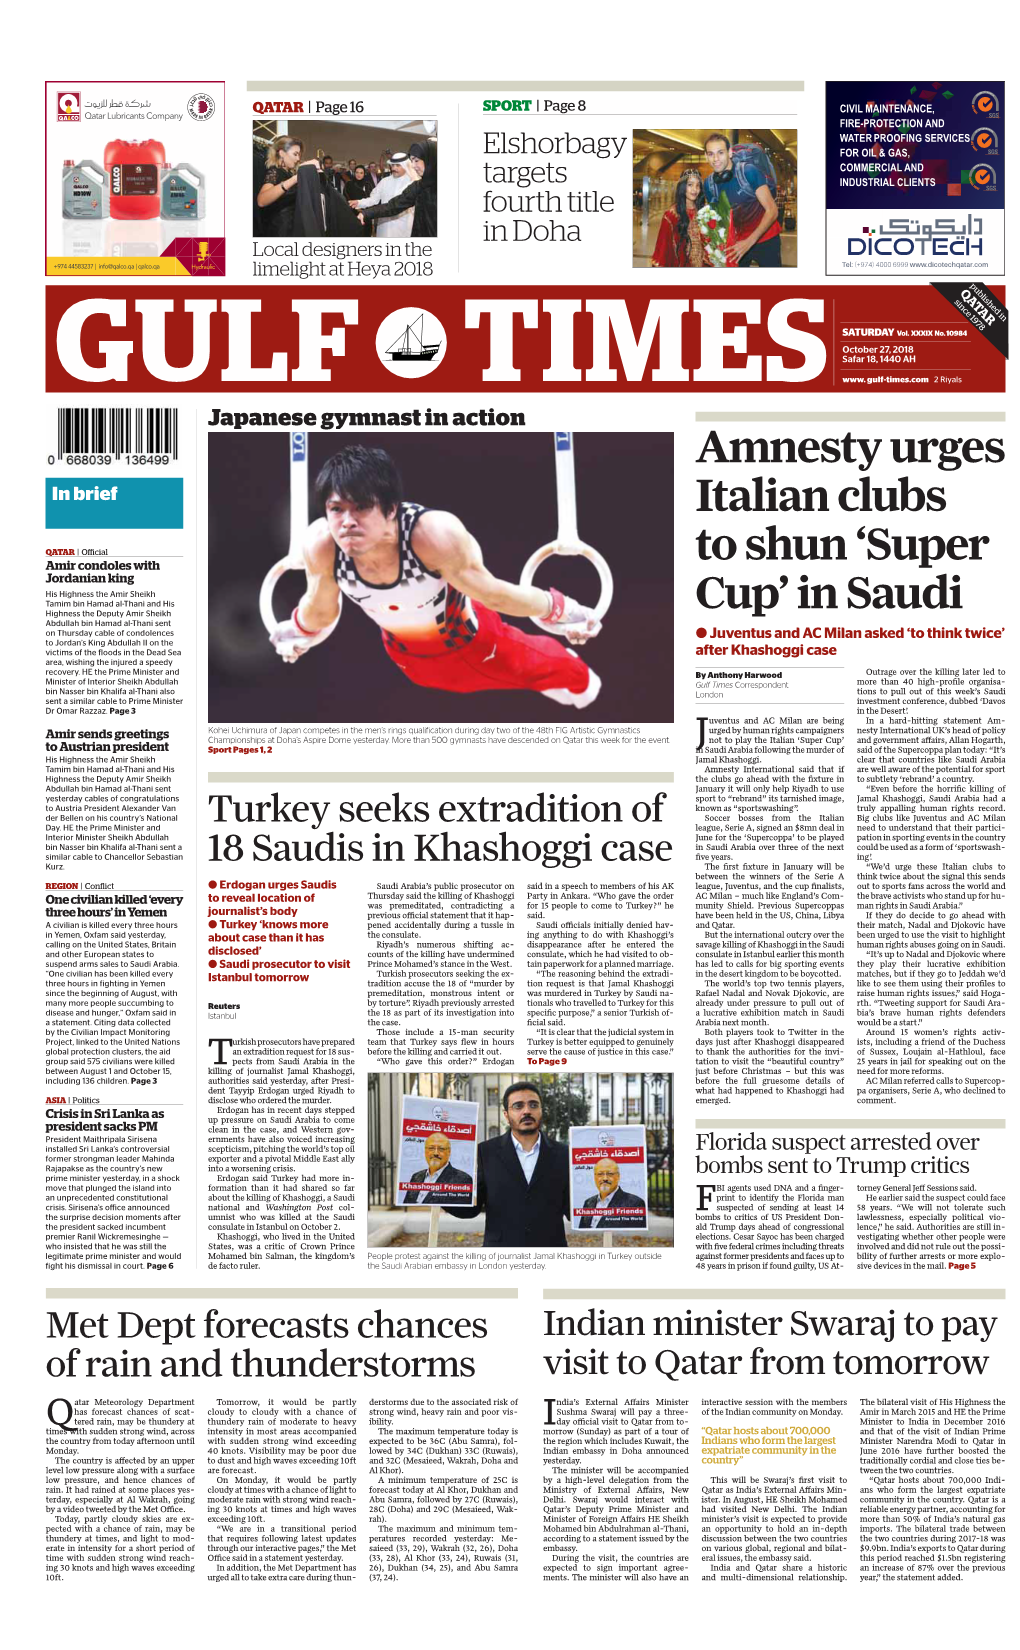 Amnesty Urges Italian Clubs to Shun 'Super Cup' in Saudi